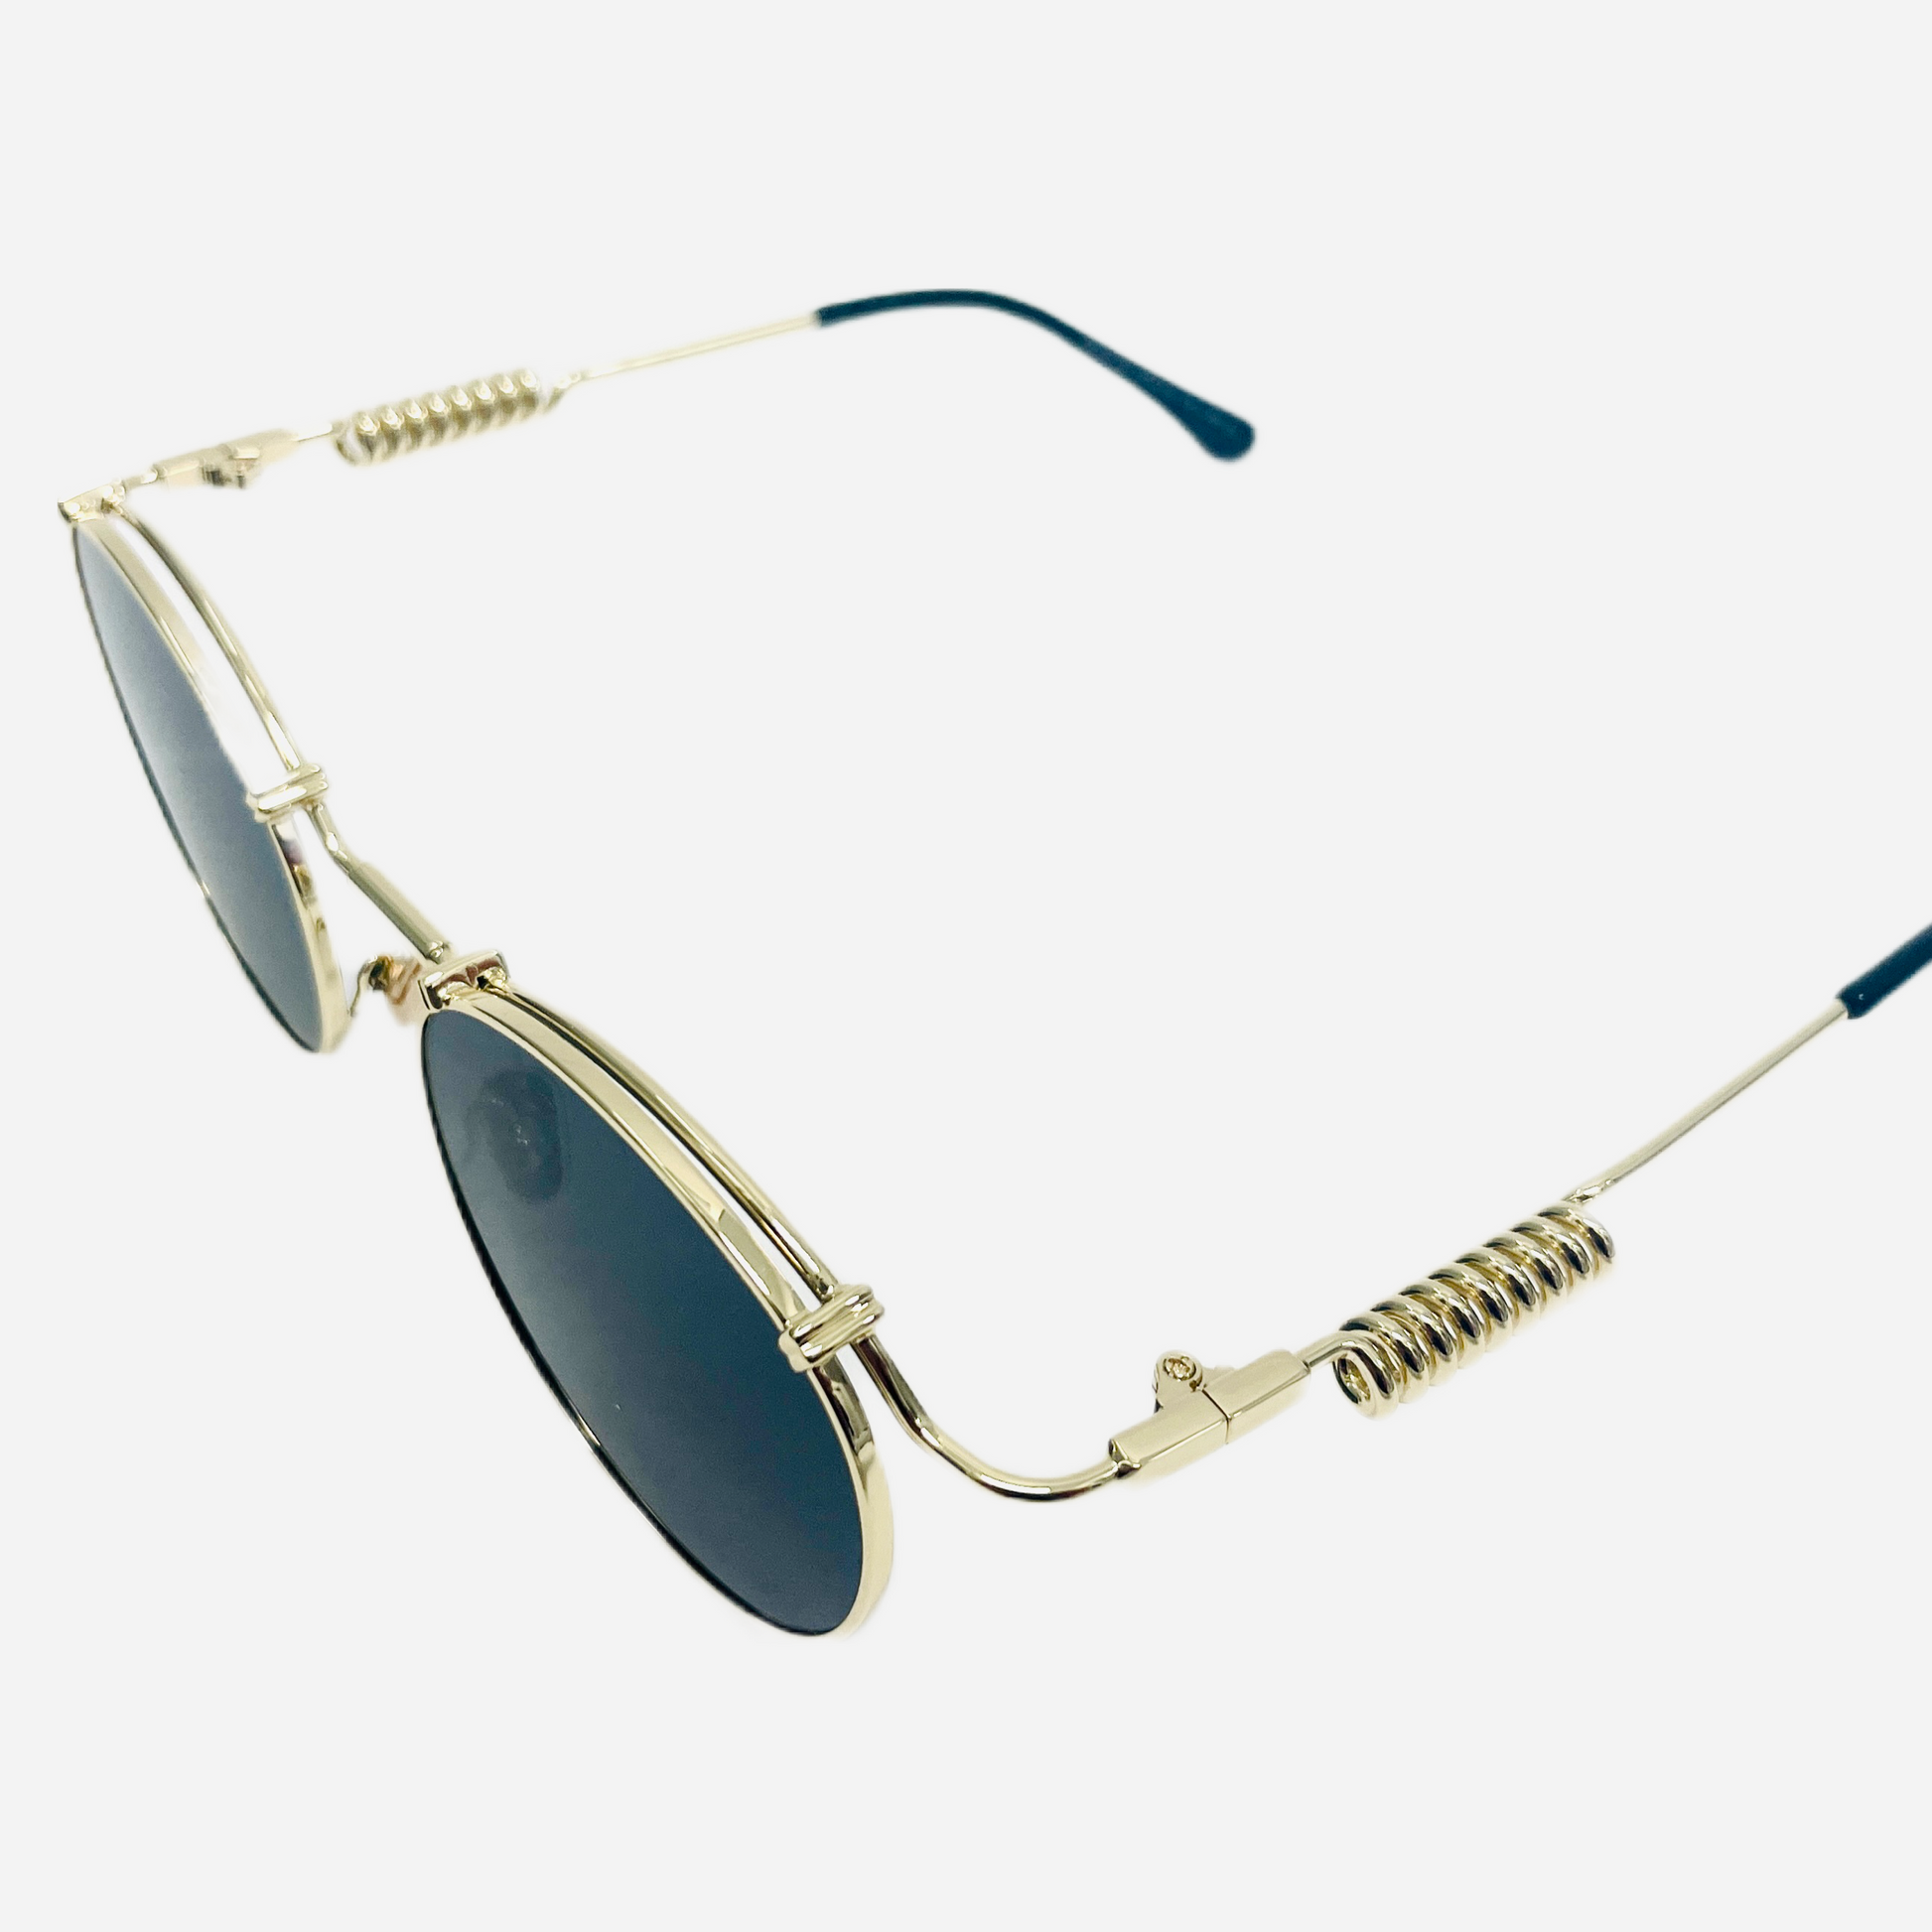 Vintage-Jean-Paul-Gaultier-Sonnenbrille-Sunglasses-Model-56-9174-gold-front-side